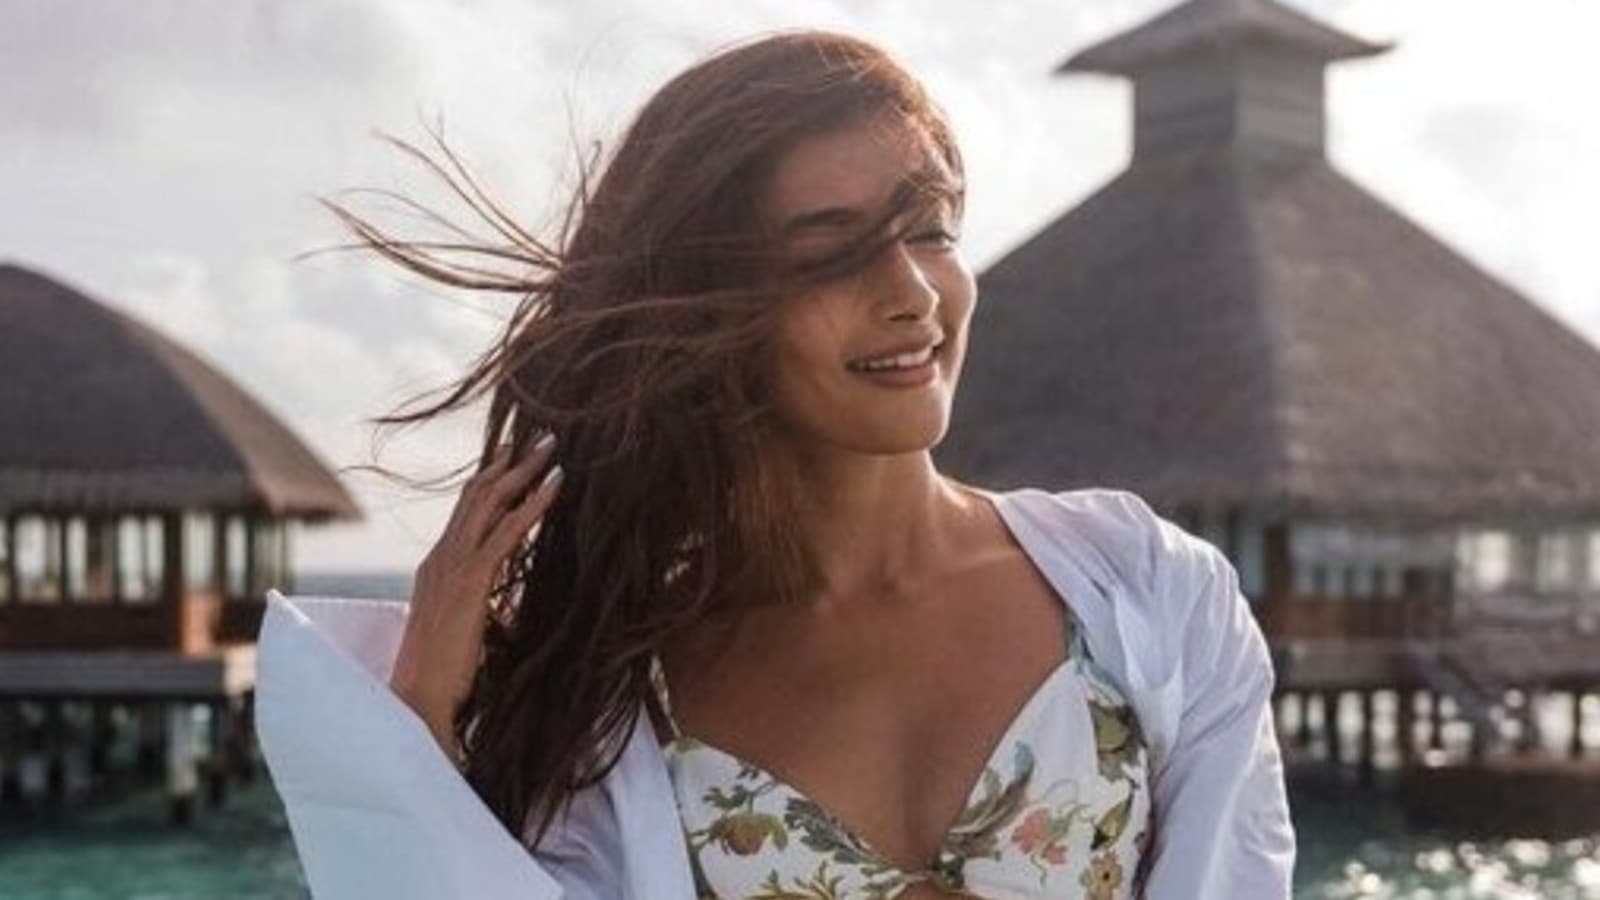 Porn Videos Of Pooja Hegde - Pooja Hegde in bikini top and shorts worth â‚¹10k enjoys wind in her hair |  Fashion Trends - Hindustan Times